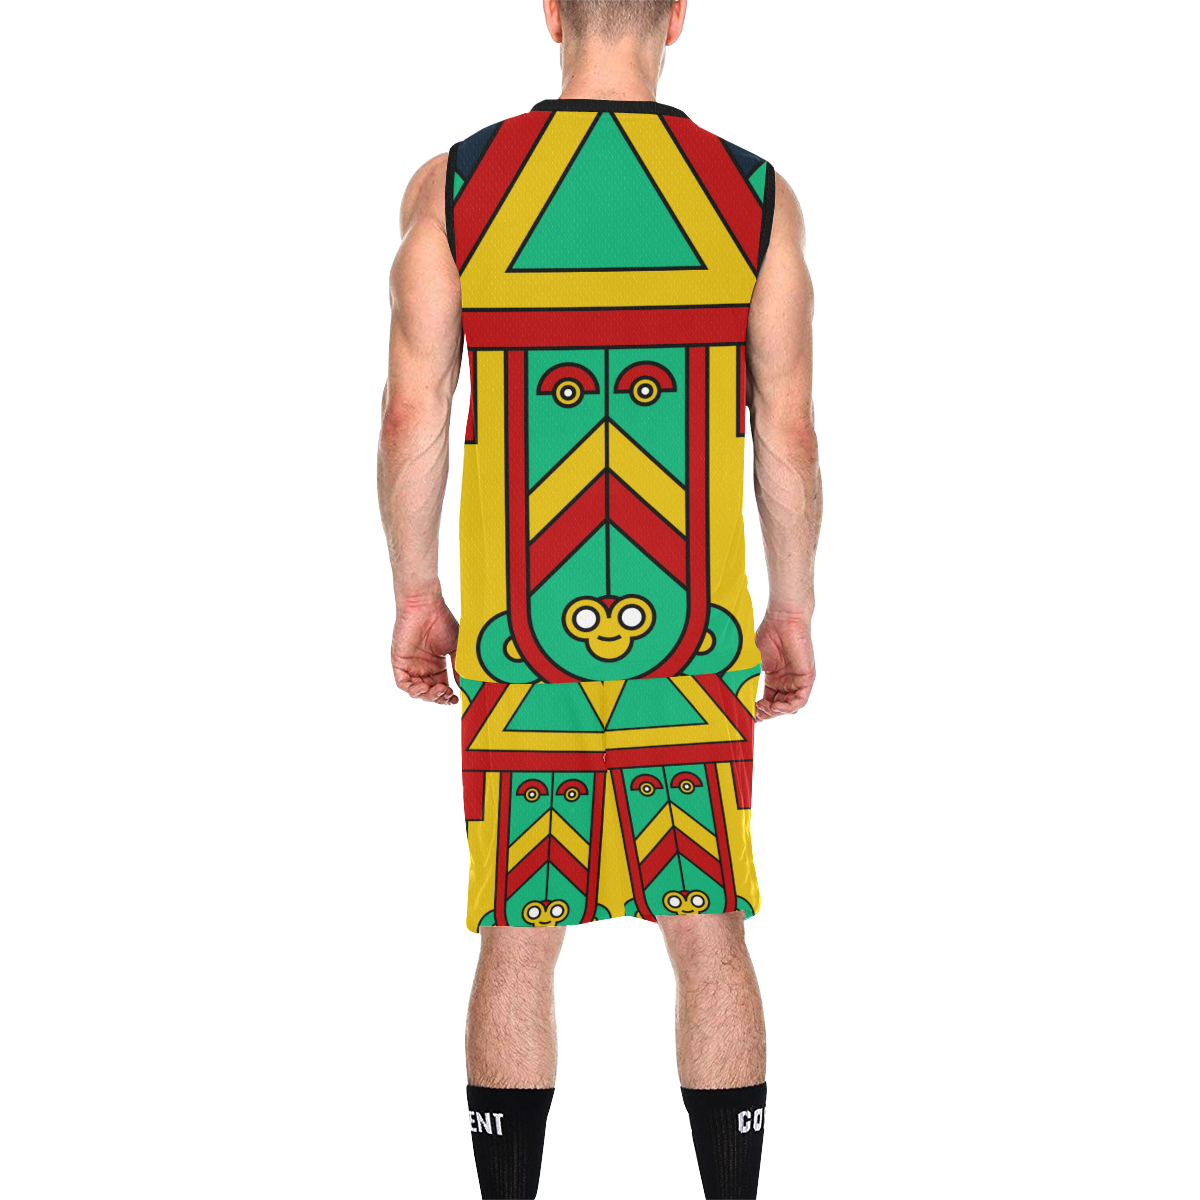 Aztec Spiritual Tribal All Over Print Basketball Uniform